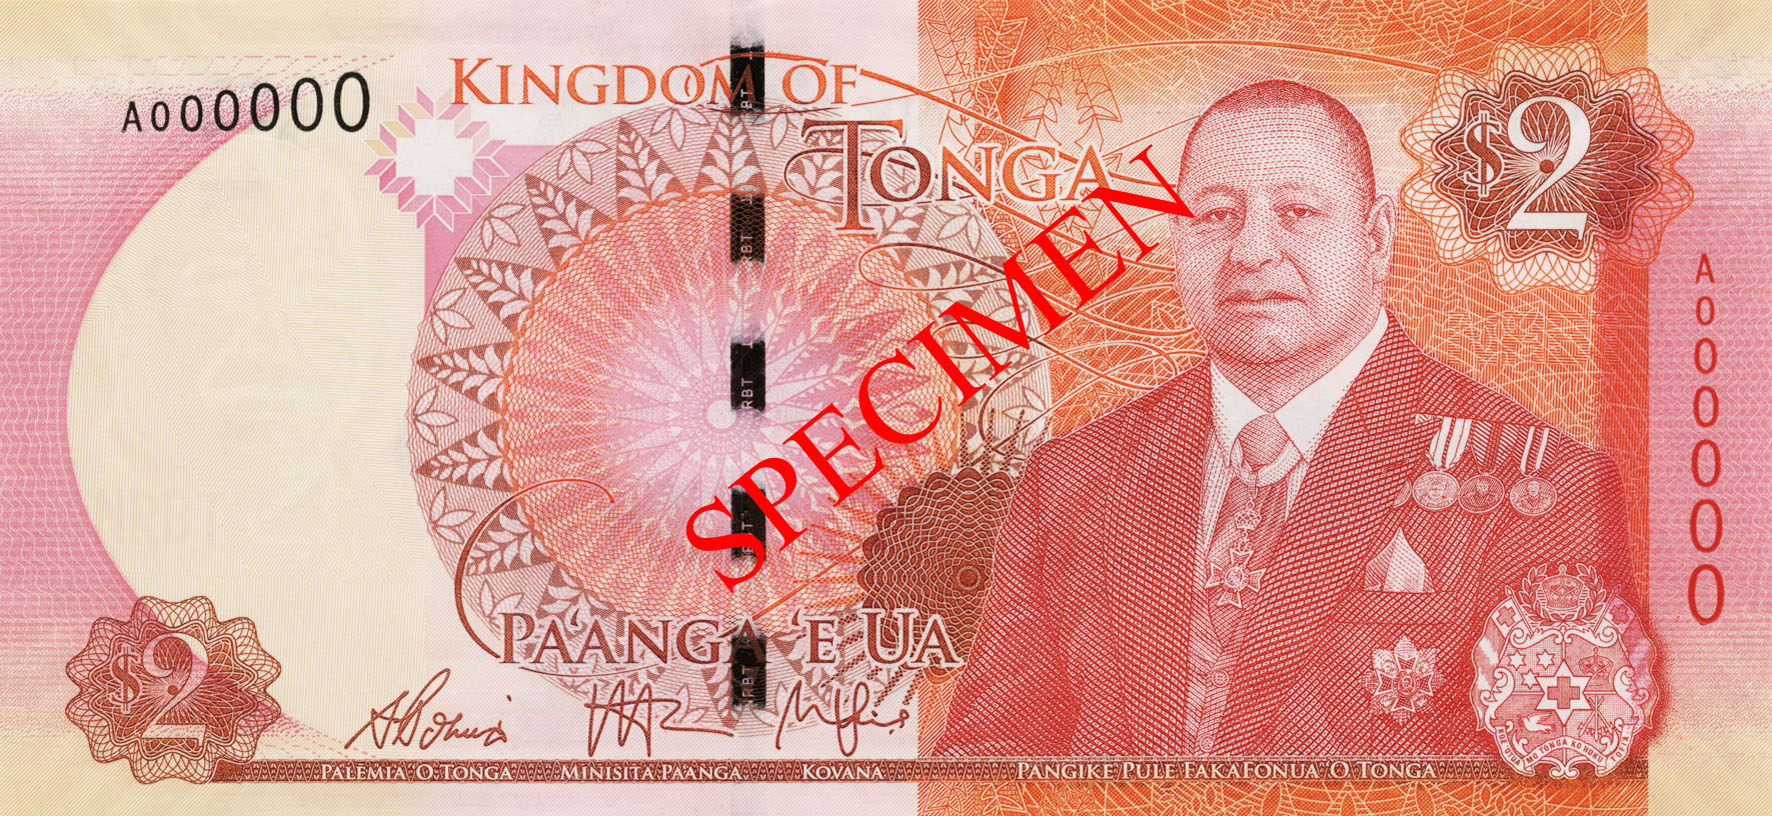 Tonga-2-2015-Specimen-front300dpi